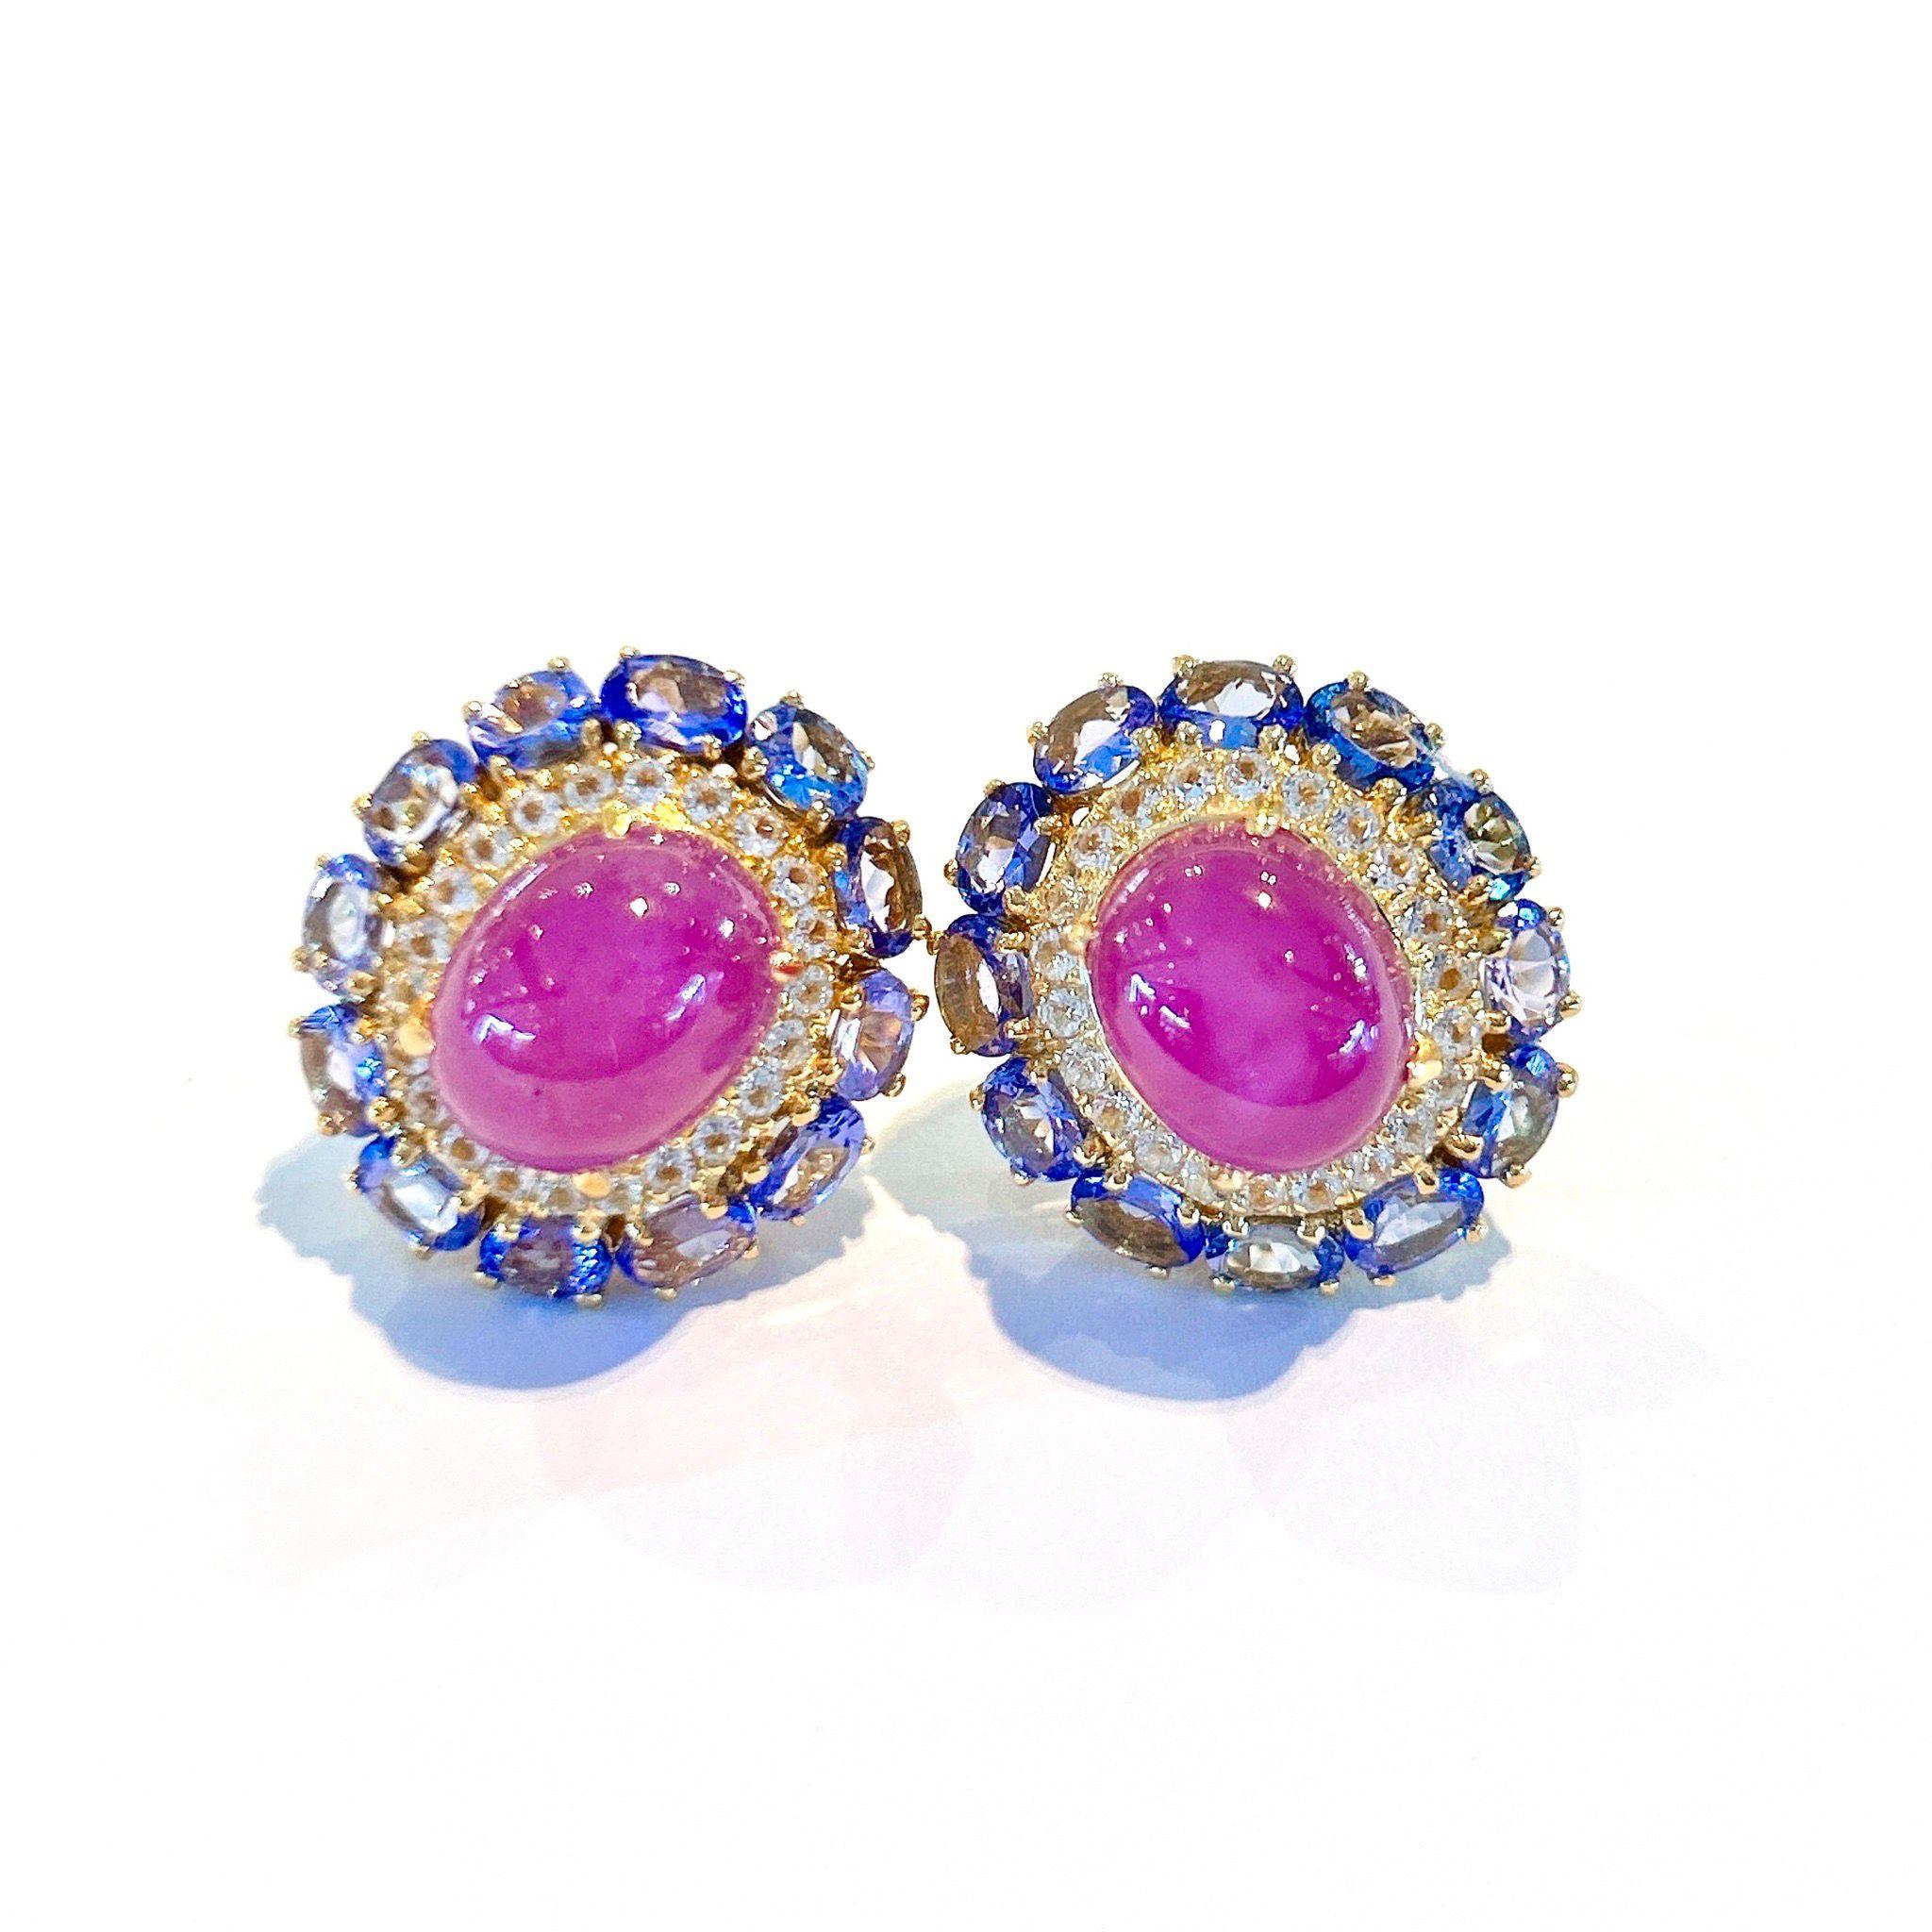 Bochic “Capri” Earrings & Cocktail Ring, Multi Gems Set in 22k Gold & Silver 4